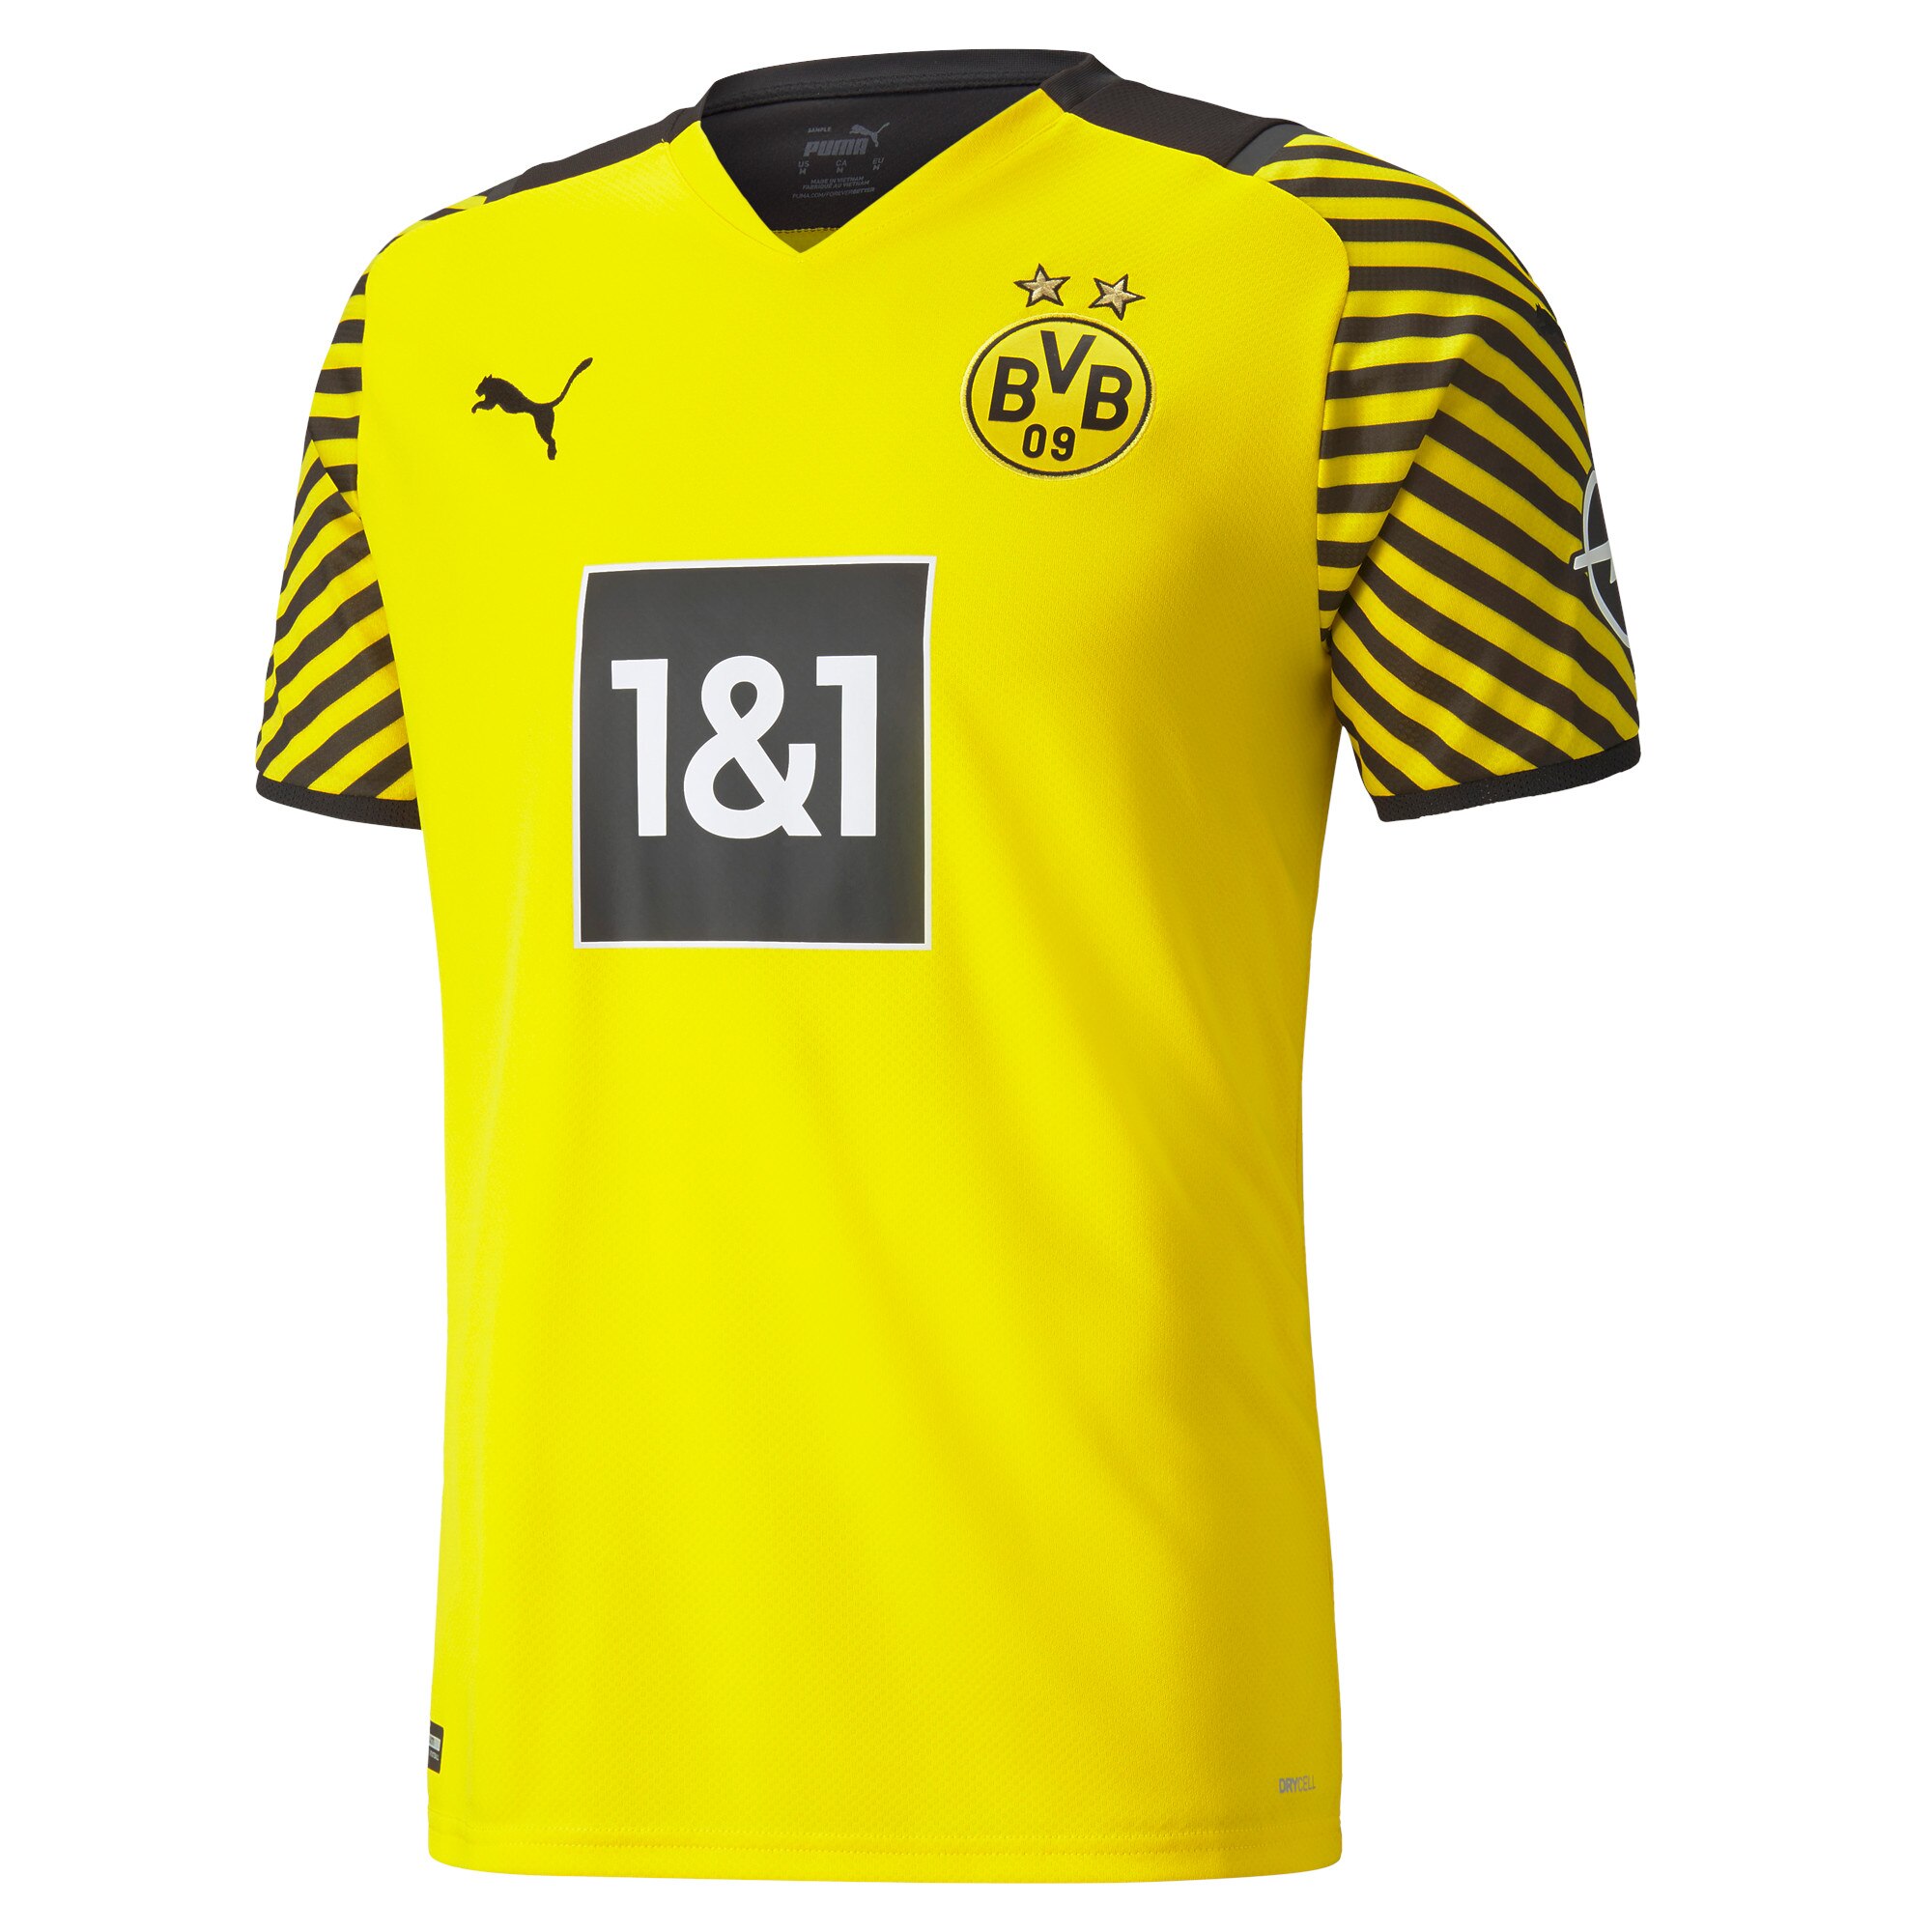 Borussia Dortmund Home Shirt 2021-22 with Haaland 9 printing